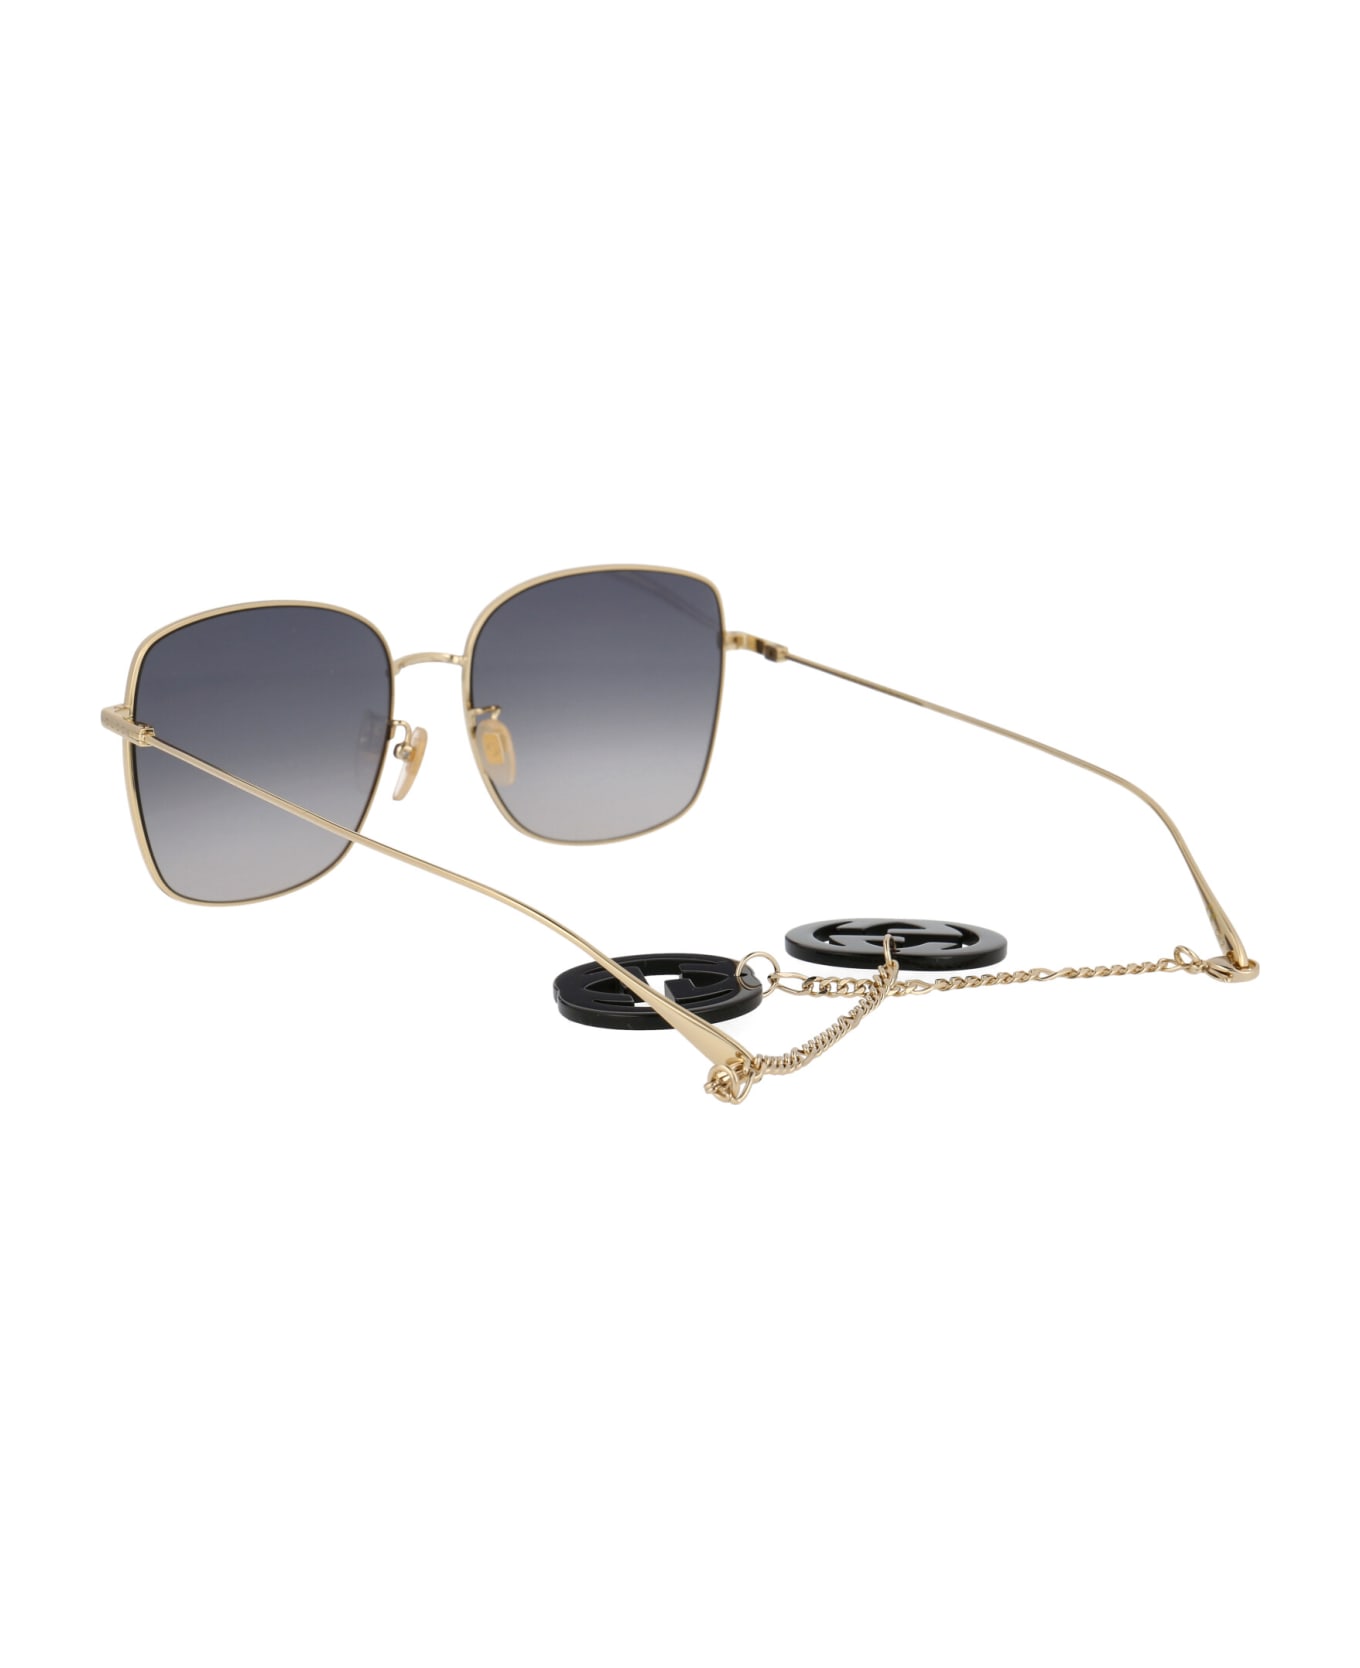 Gucci Eyewear Gg1030sk Sunglasses - 001 GOLD GOLD GREY